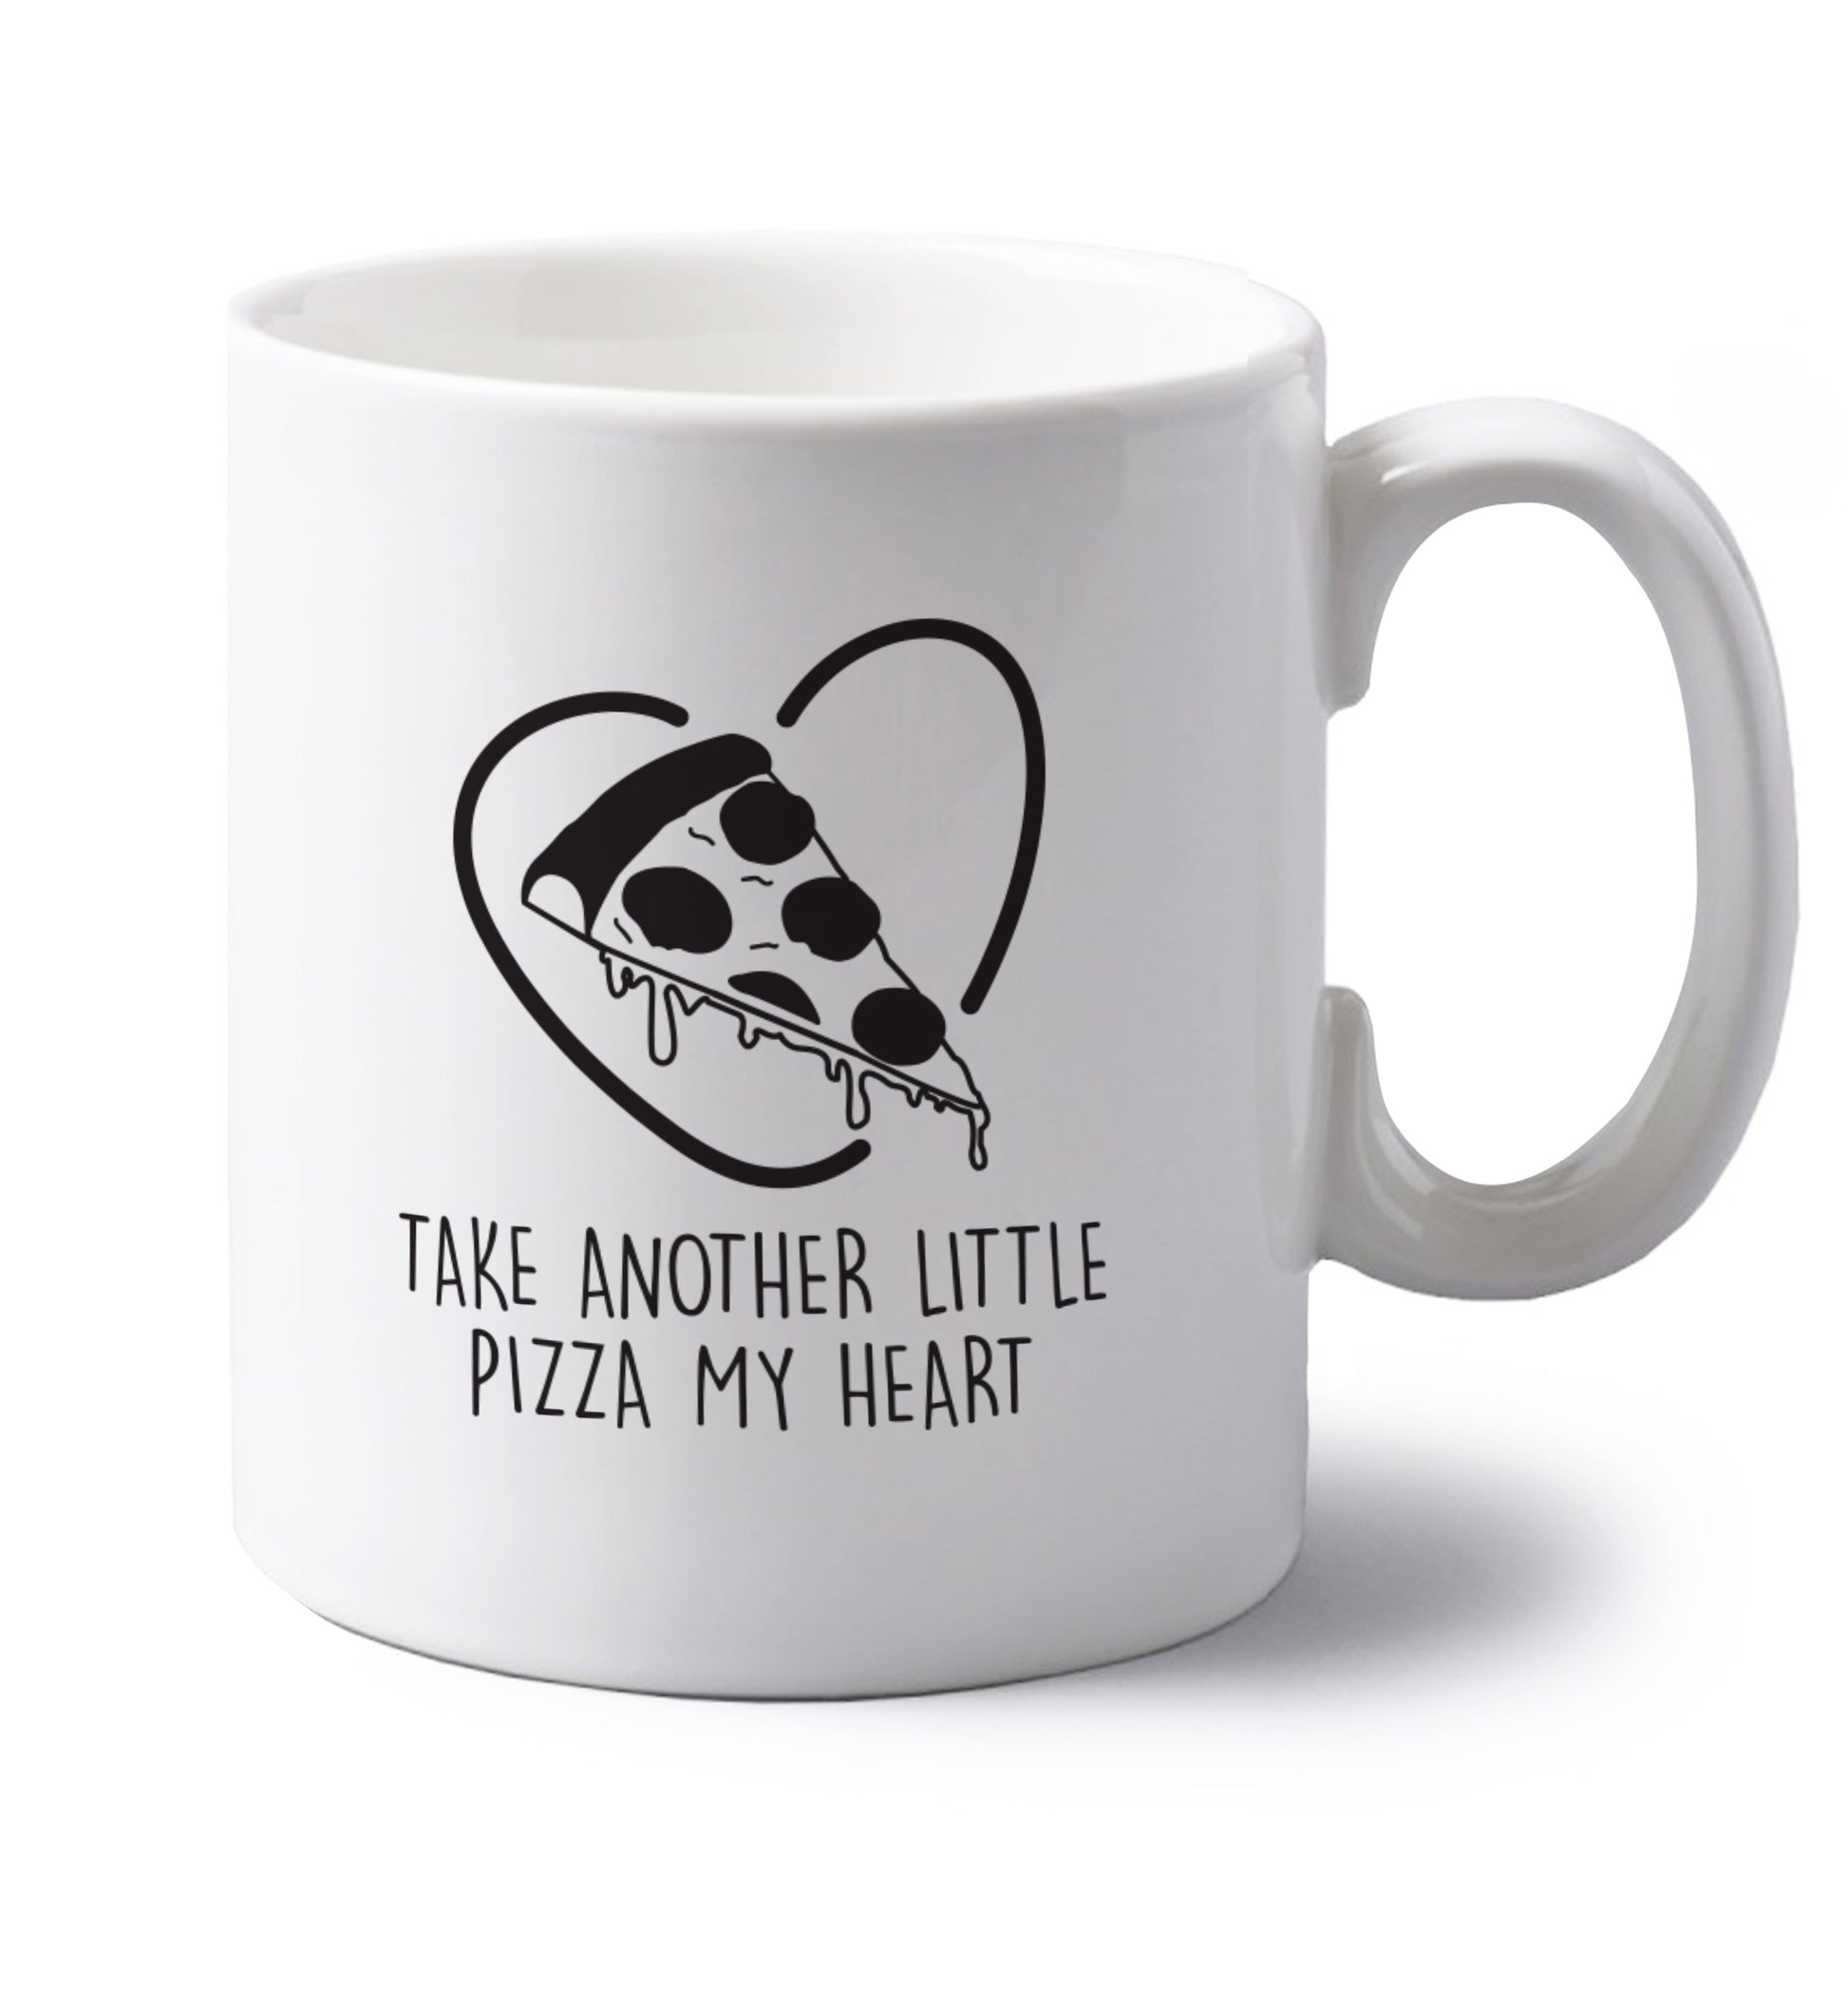 Take another little pizza my heart left handed white ceramic mug 